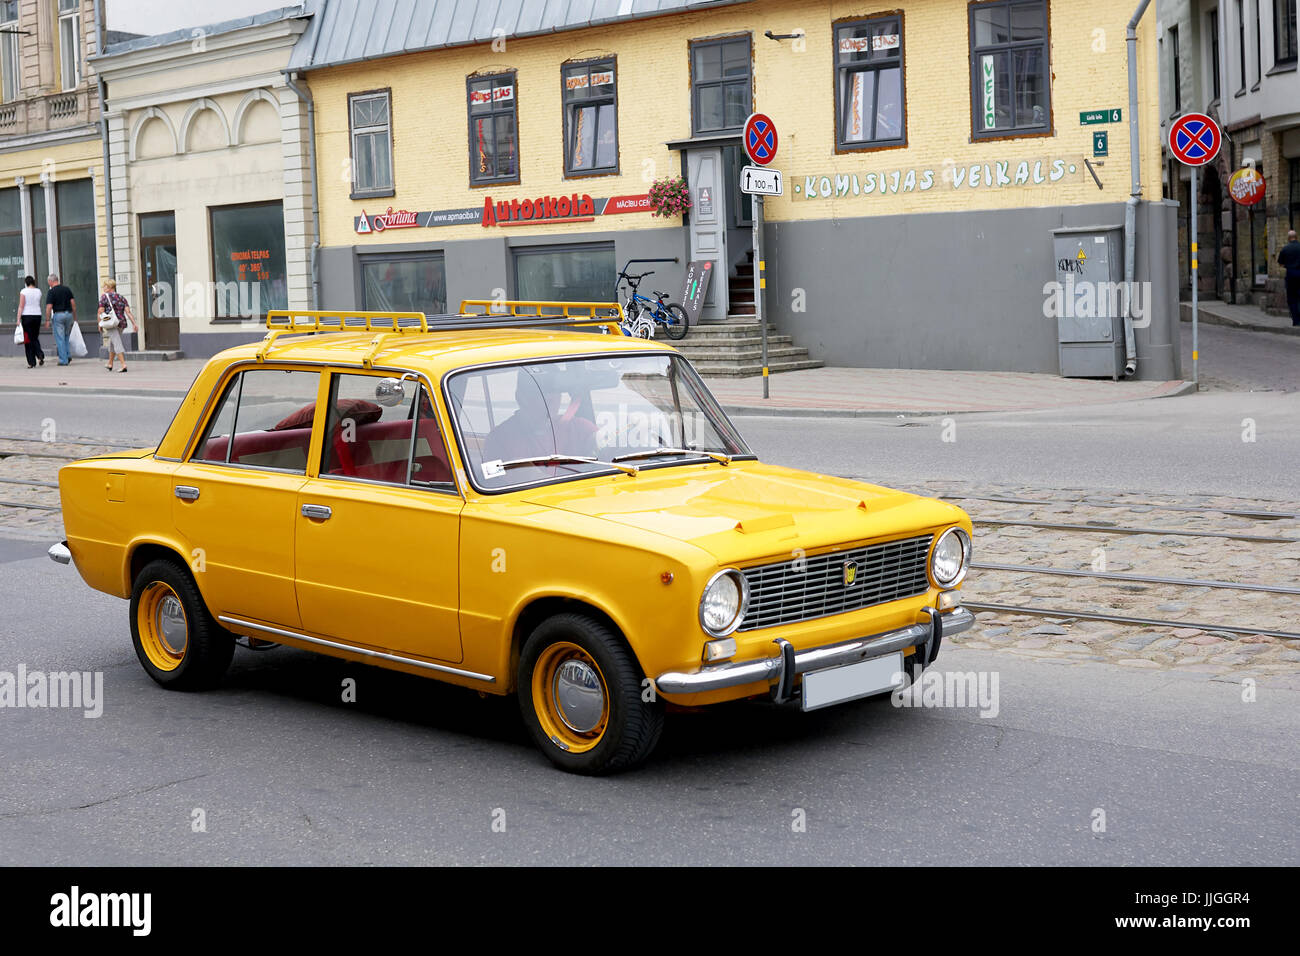 LIEPAJA, LATVIA - JULY 12 2012: Yellow russian soviet car driving on the city street Stock Photo